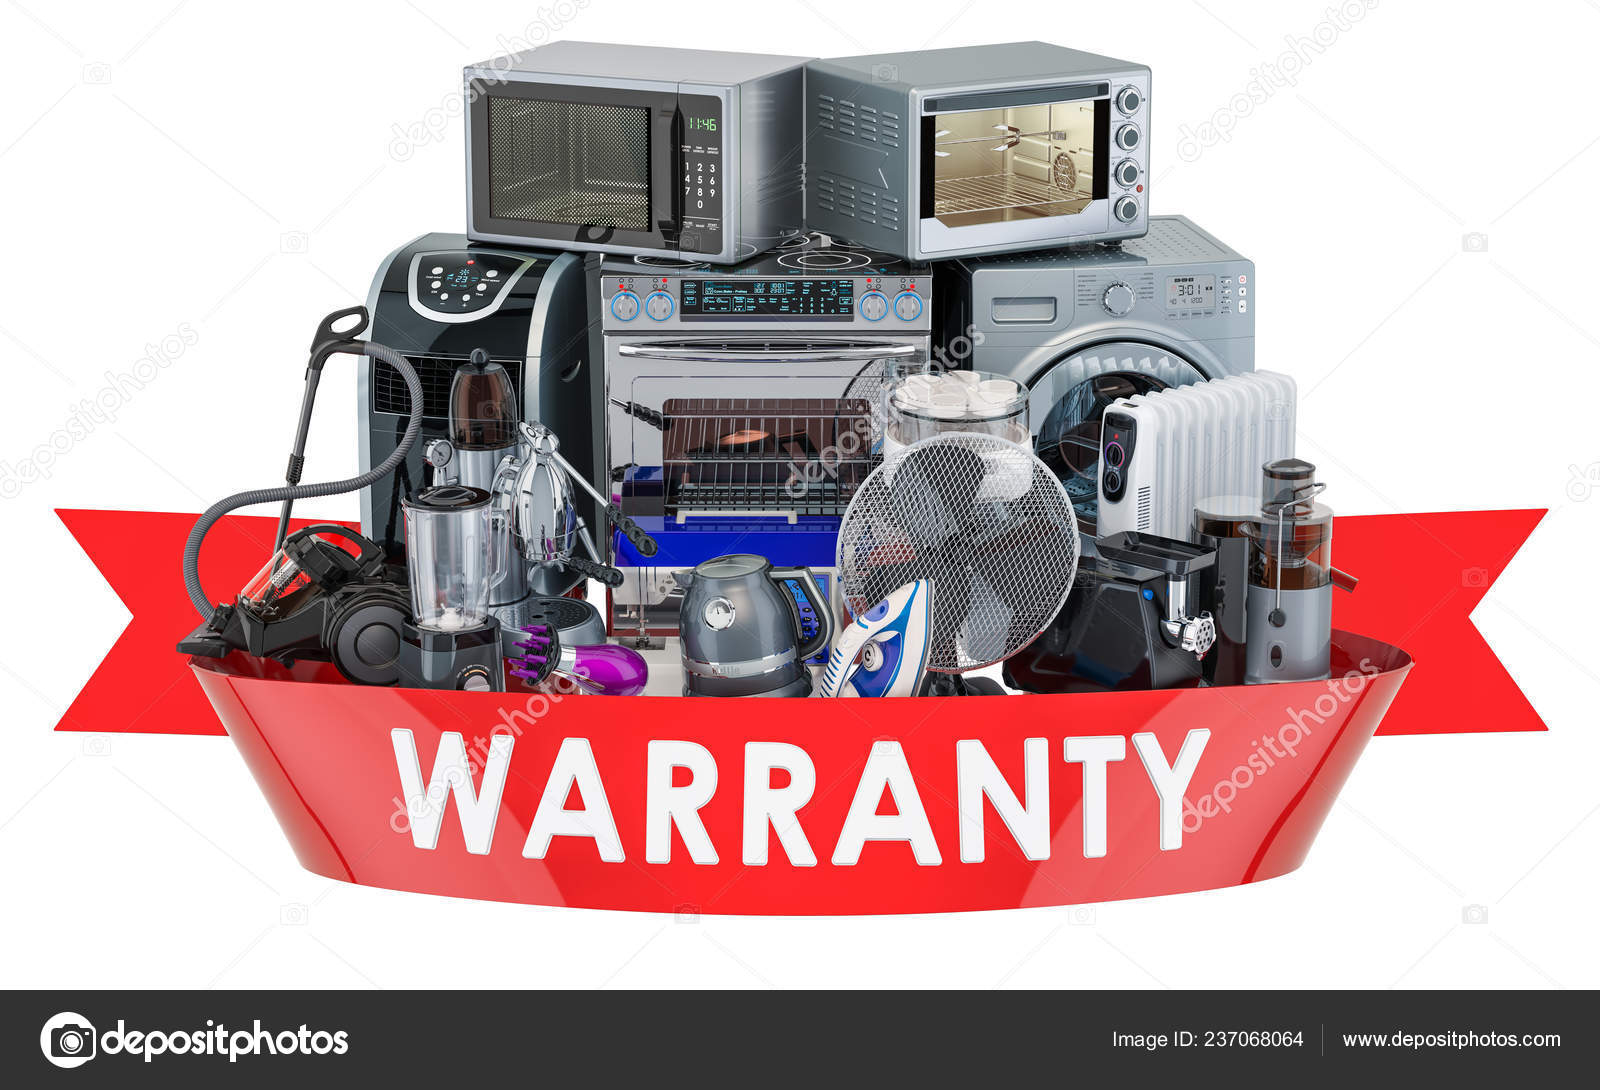 Kitchen Appliances Warranty